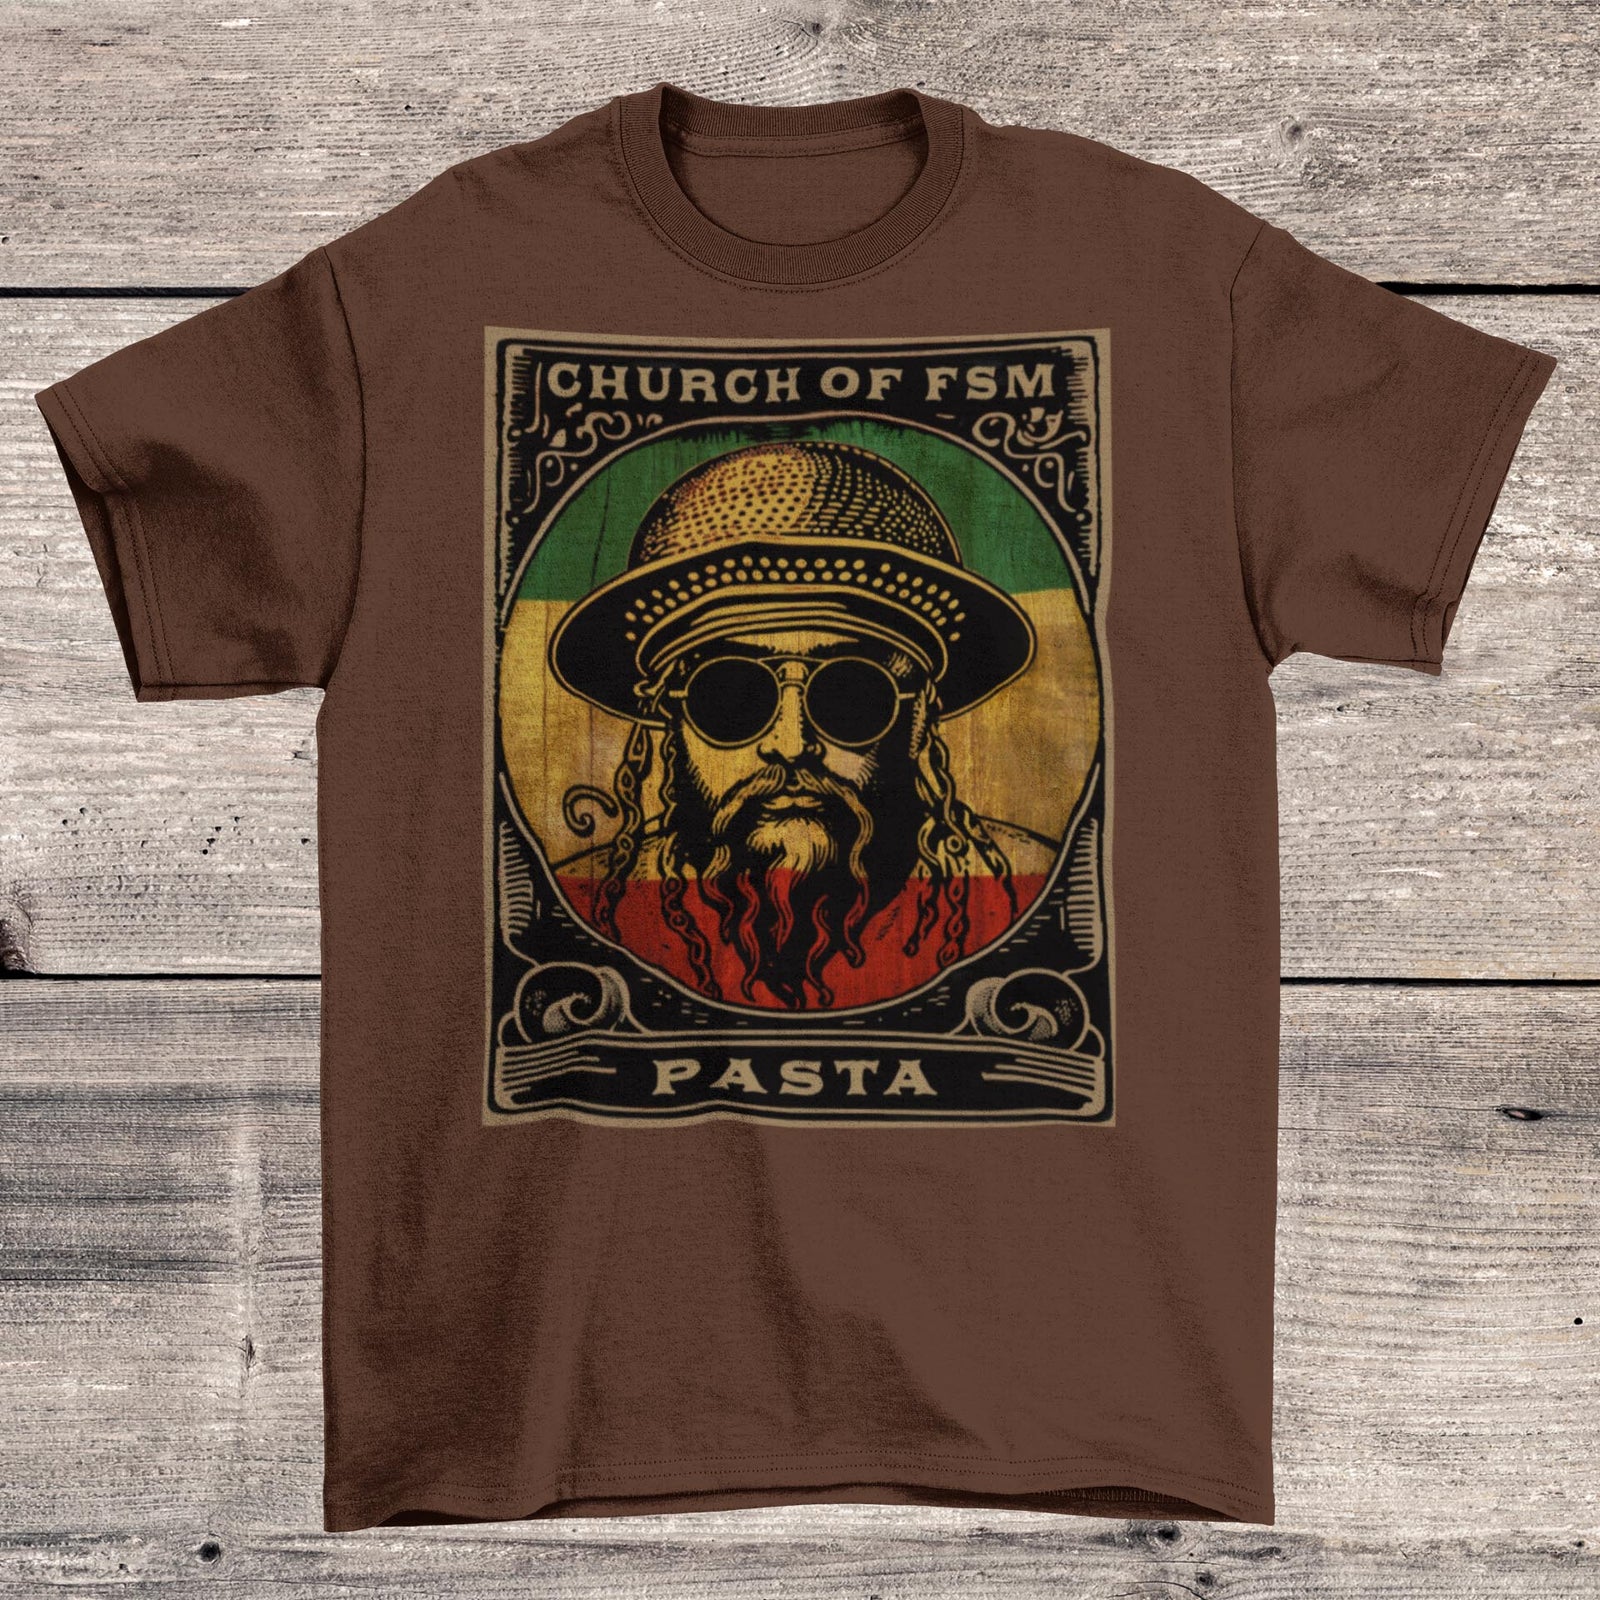 T-Shirts XS / Chestnut Pastafarianism & The Flying Spaghetti Monster (FSM) | Reggae and Atheist Inspired Pasta Graphic Art T-Shirt